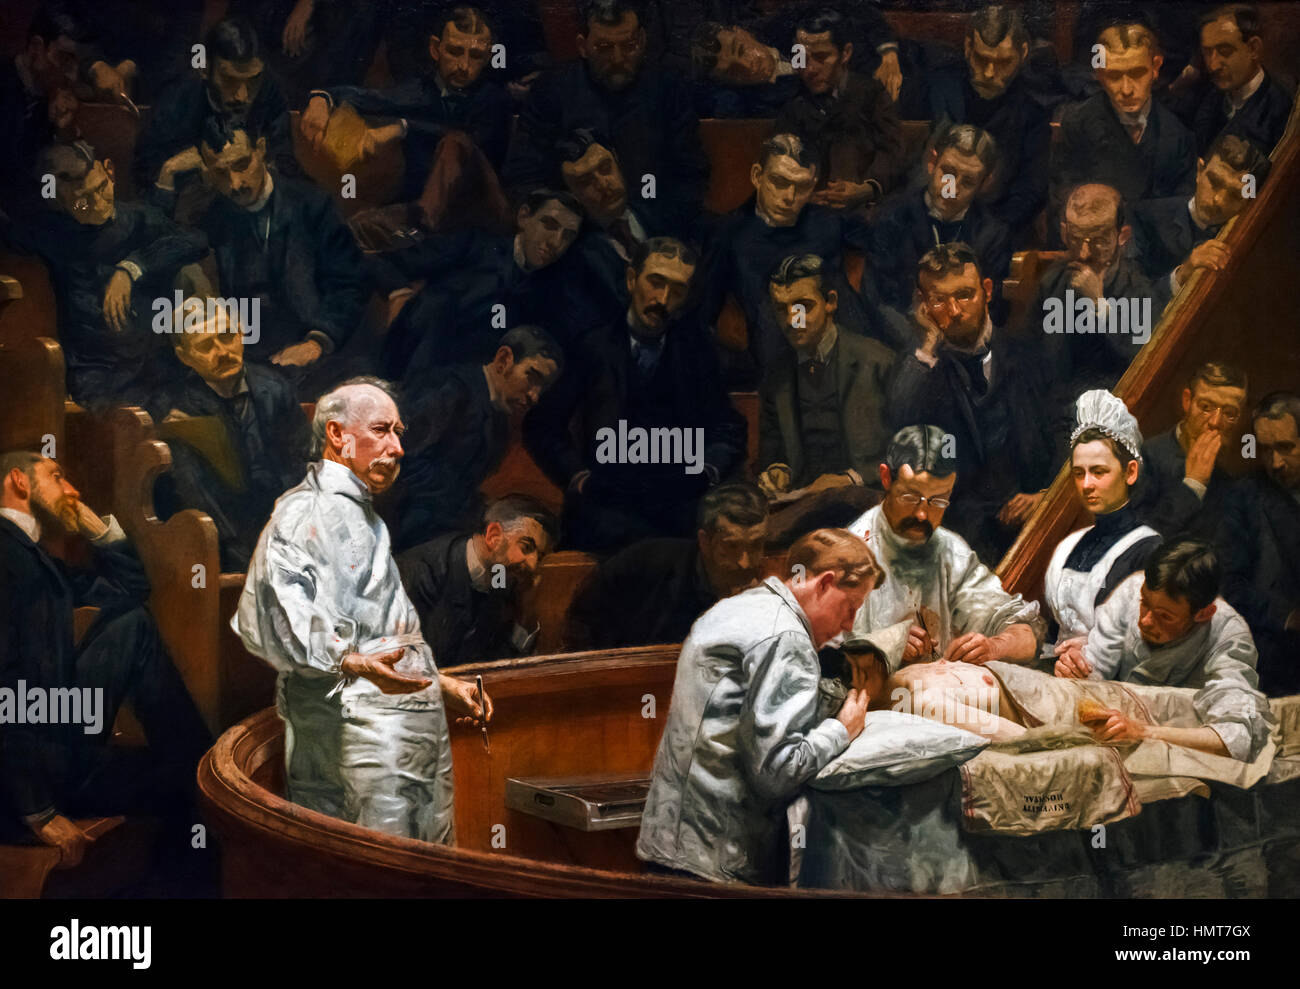 Thomas Eakins (1844-1916) "L'Agnew Clinic', olio su tela, 1889 Foto Stock